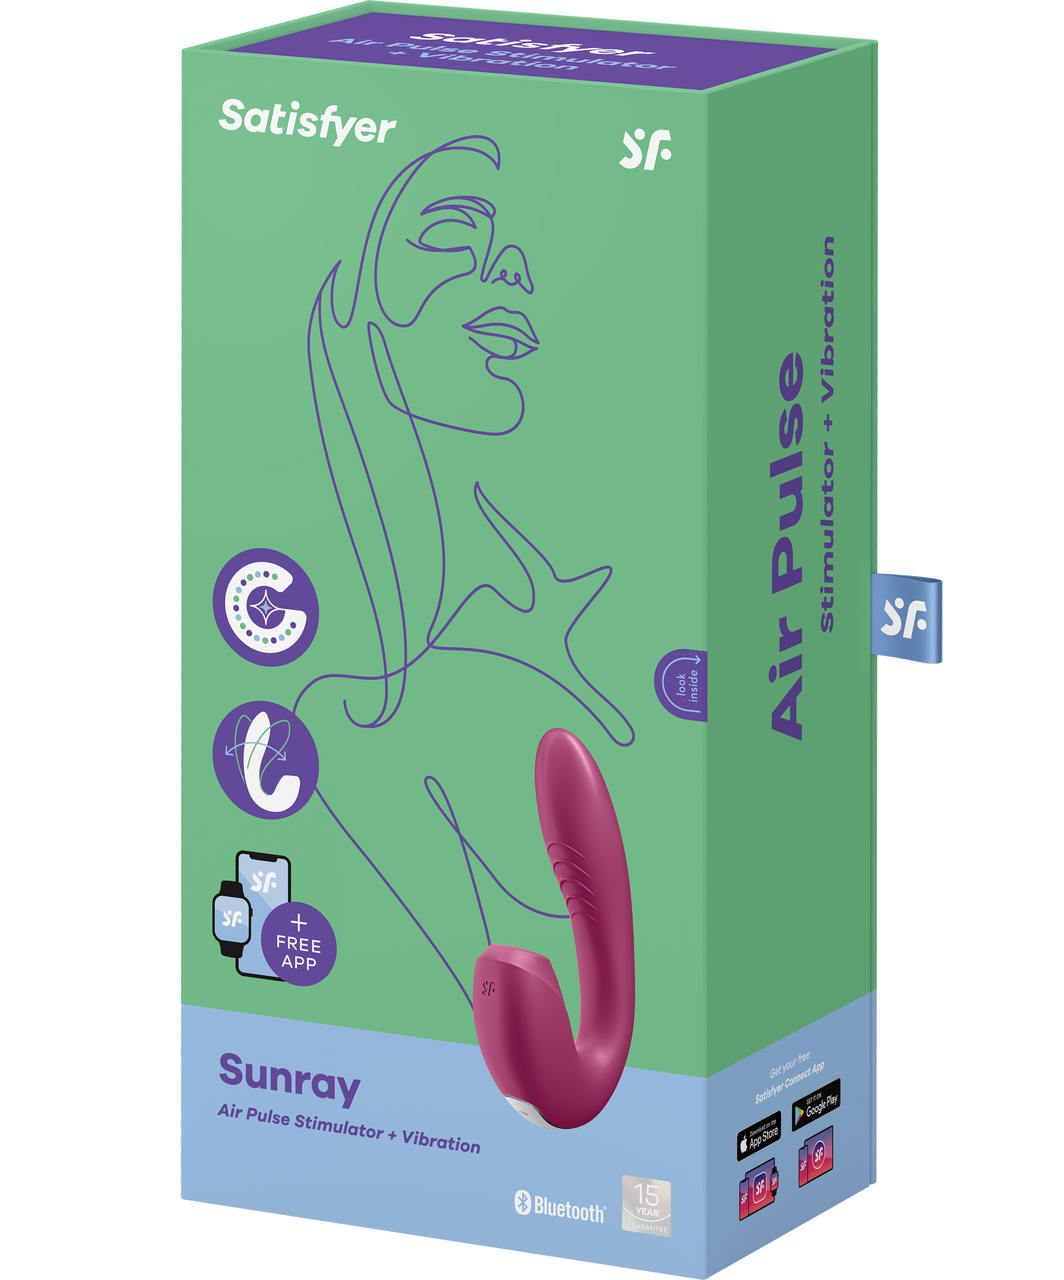 Satisfyer Sunray Air Pulse vibrators